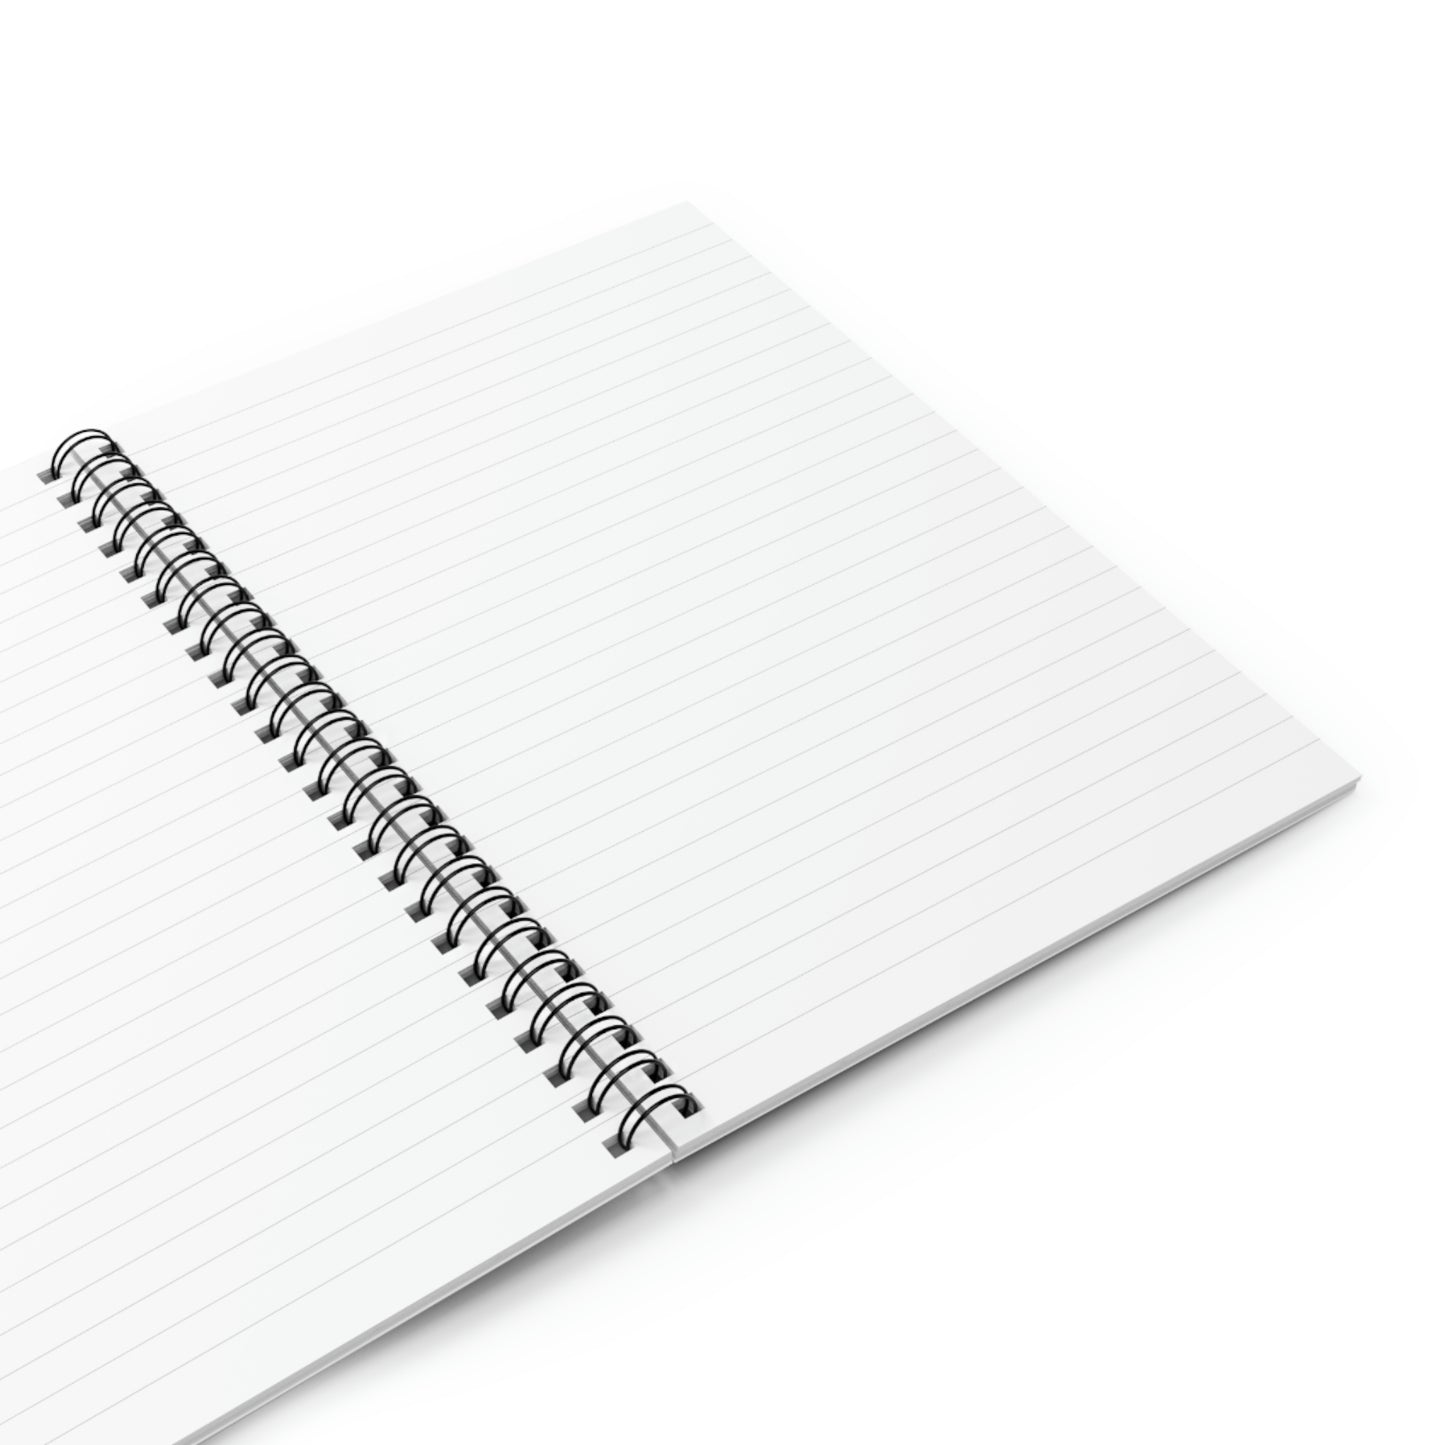 Psych Symbol Notebook